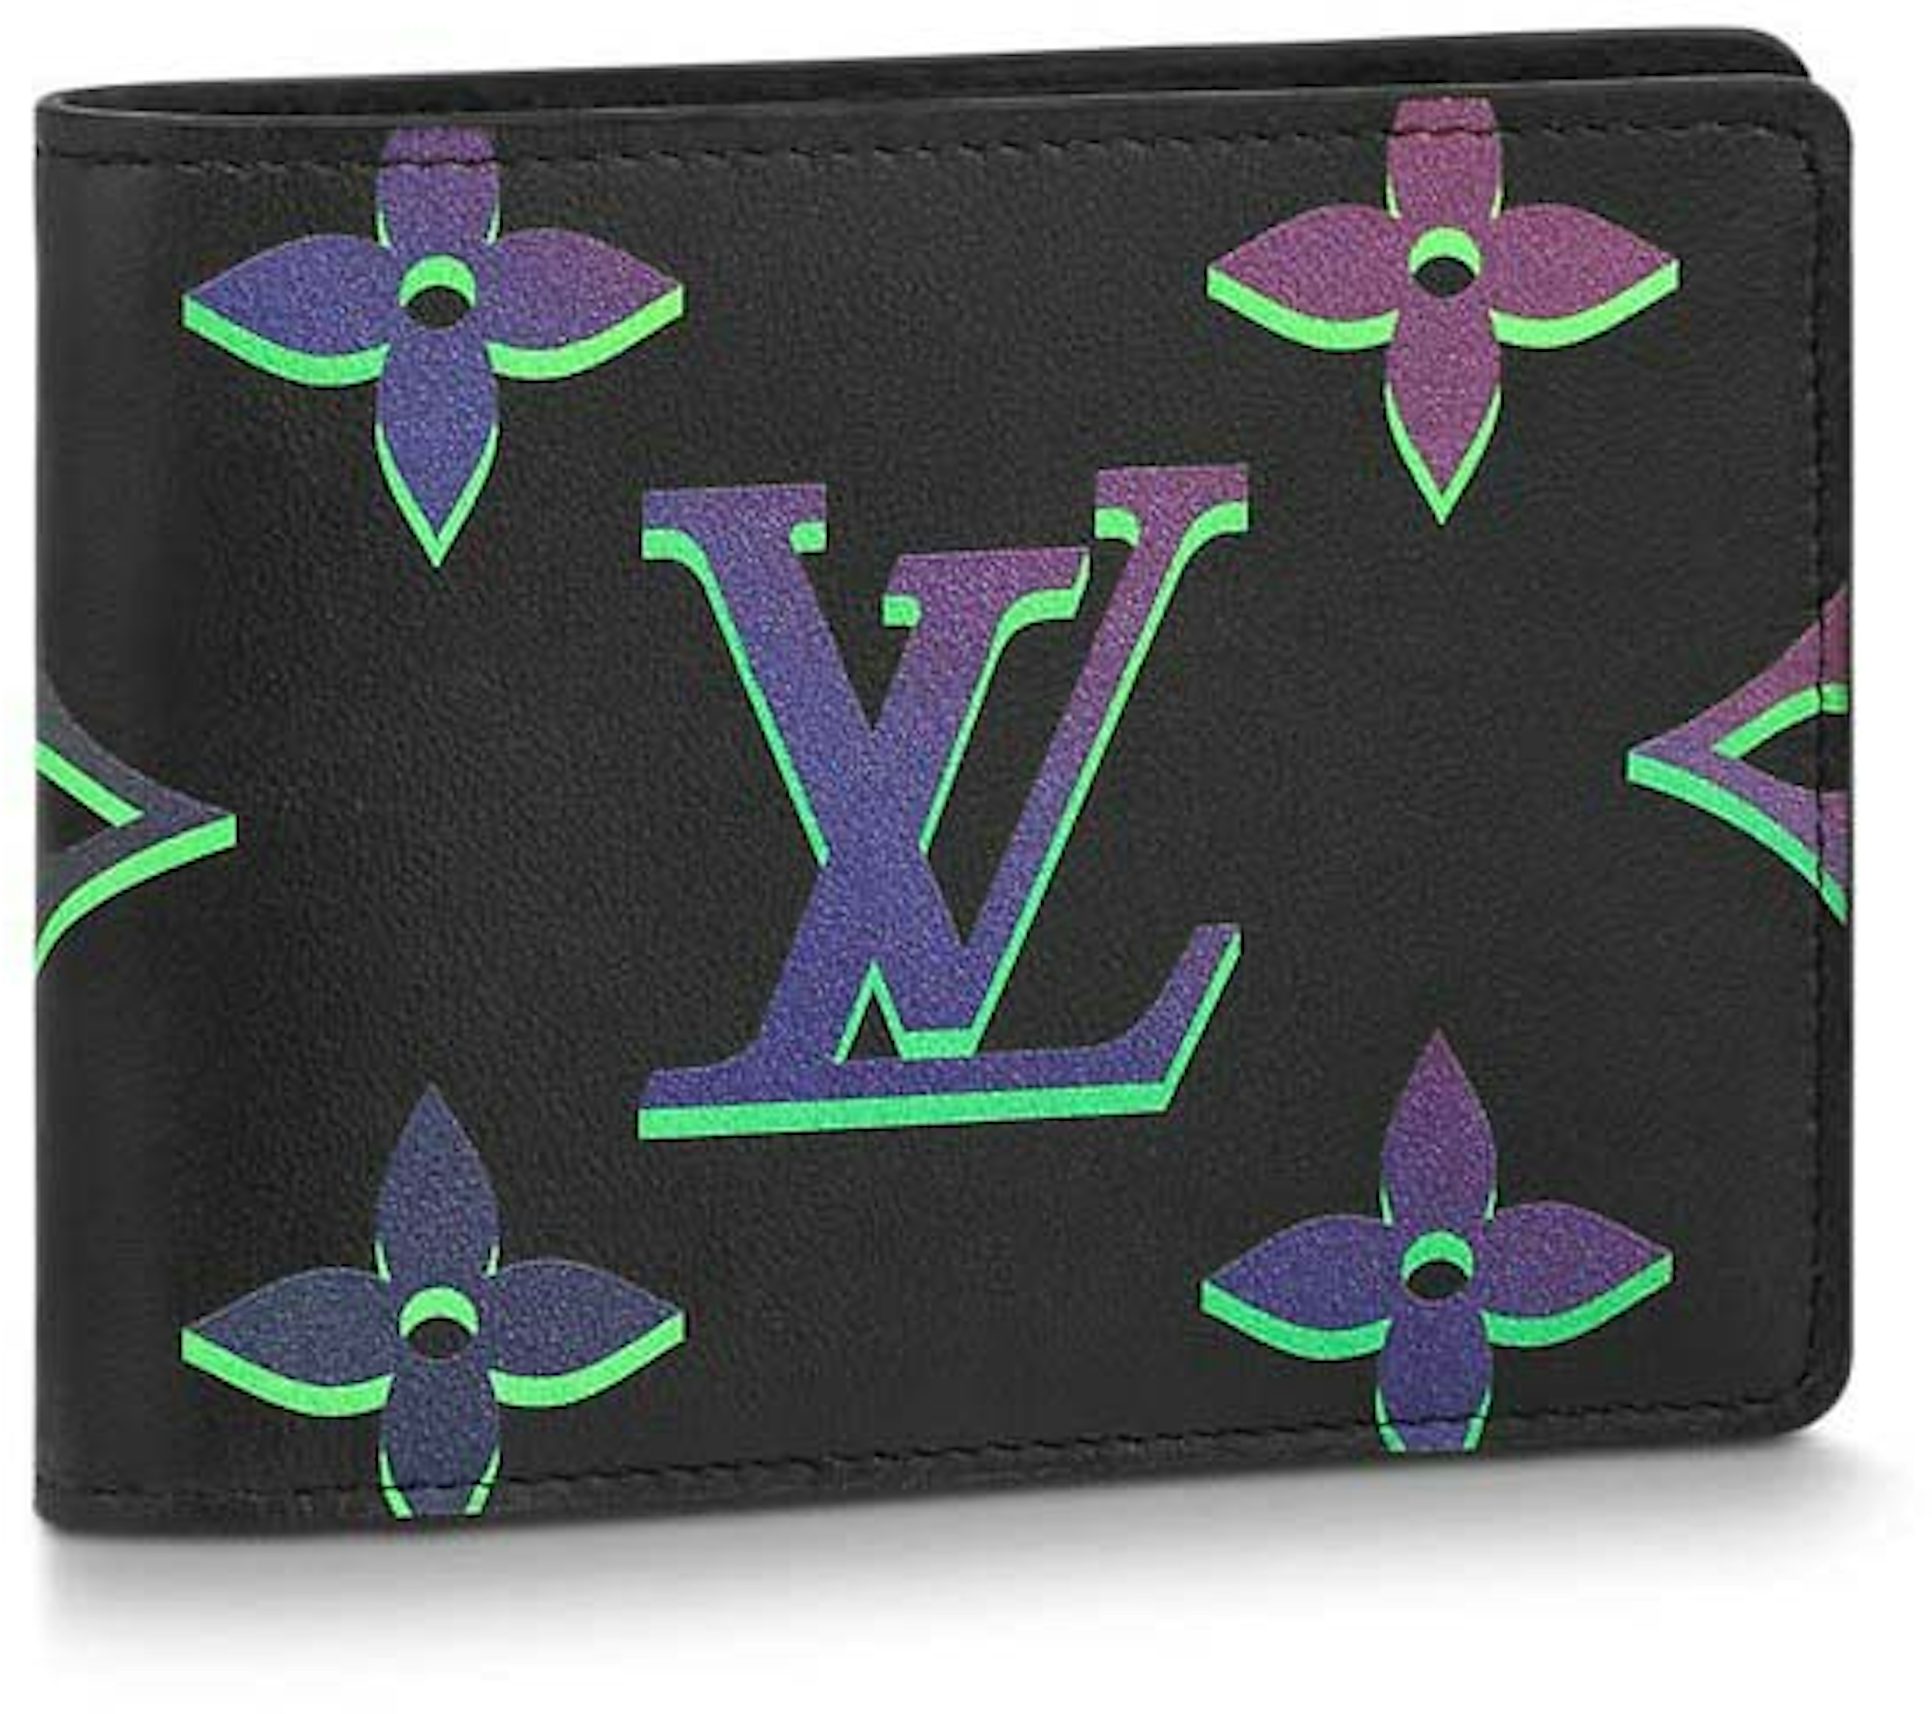 LV MEN'S Wallet Review: Louis Vuitton Multiple Wallet in Black